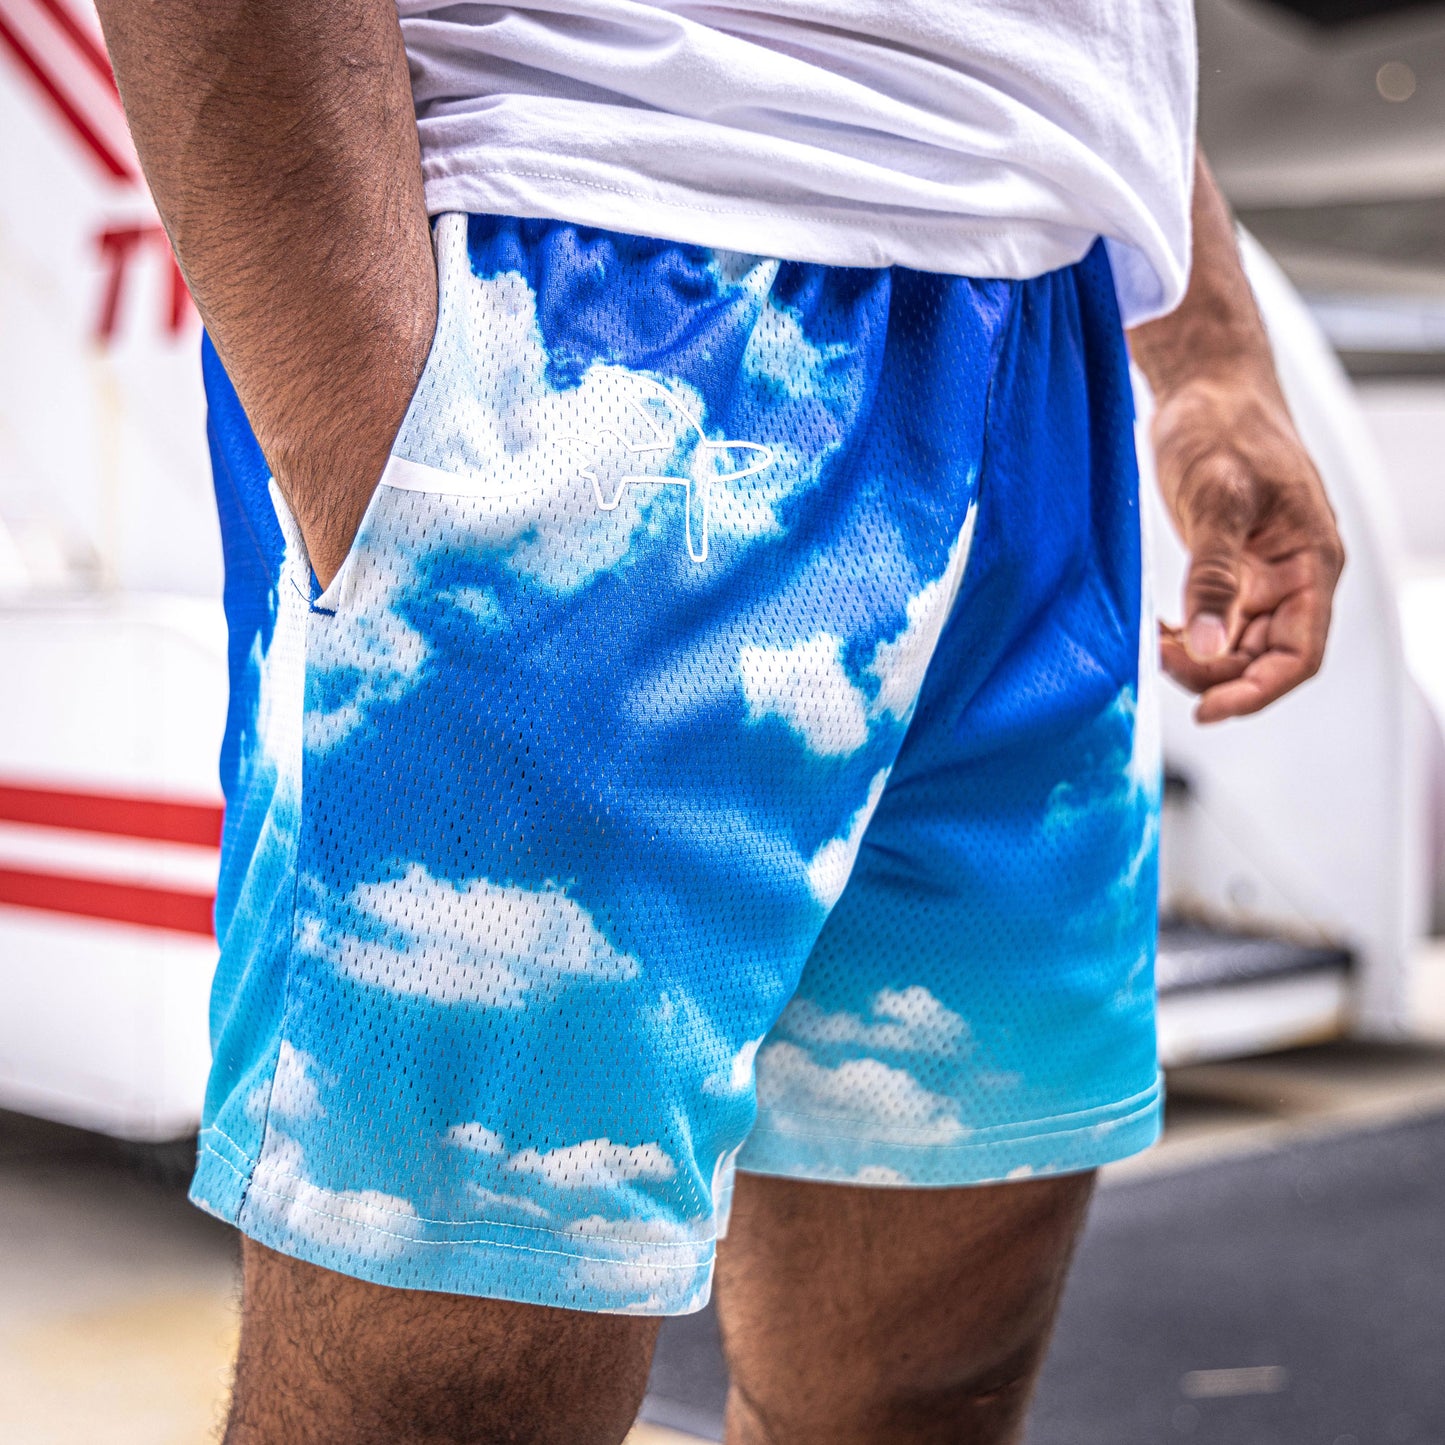 Cloud shorts, dream chaser shorts